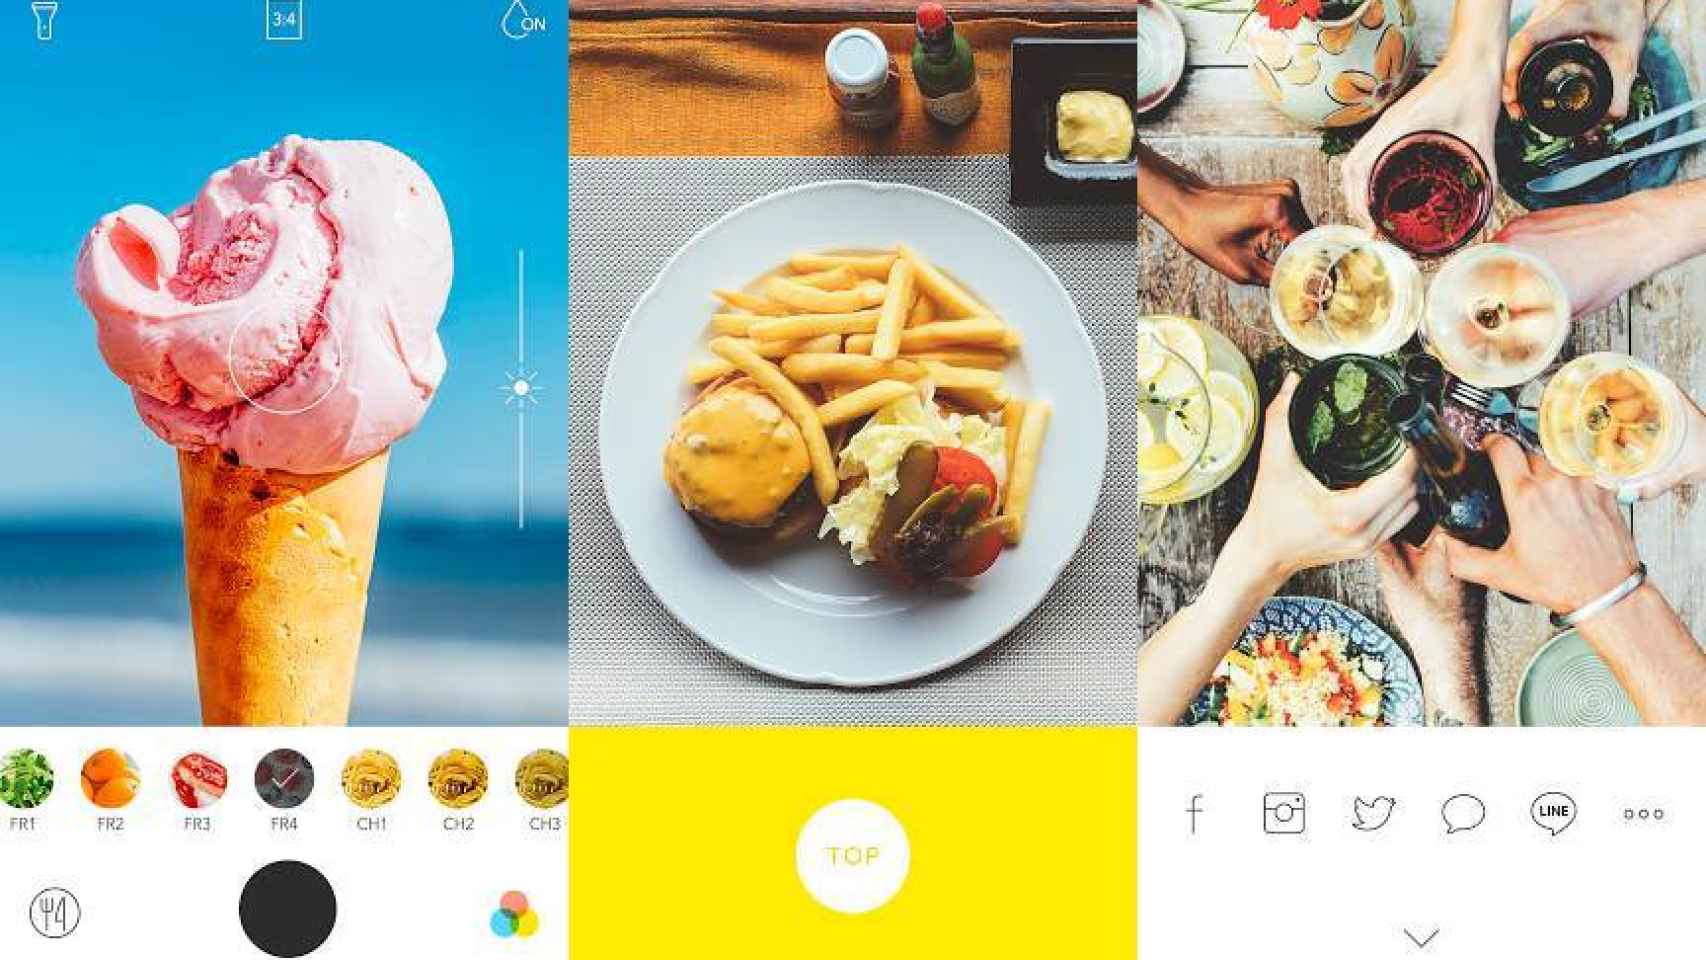 Si te gusta fotografiar la comida, Foodie será tu aplicación favorita